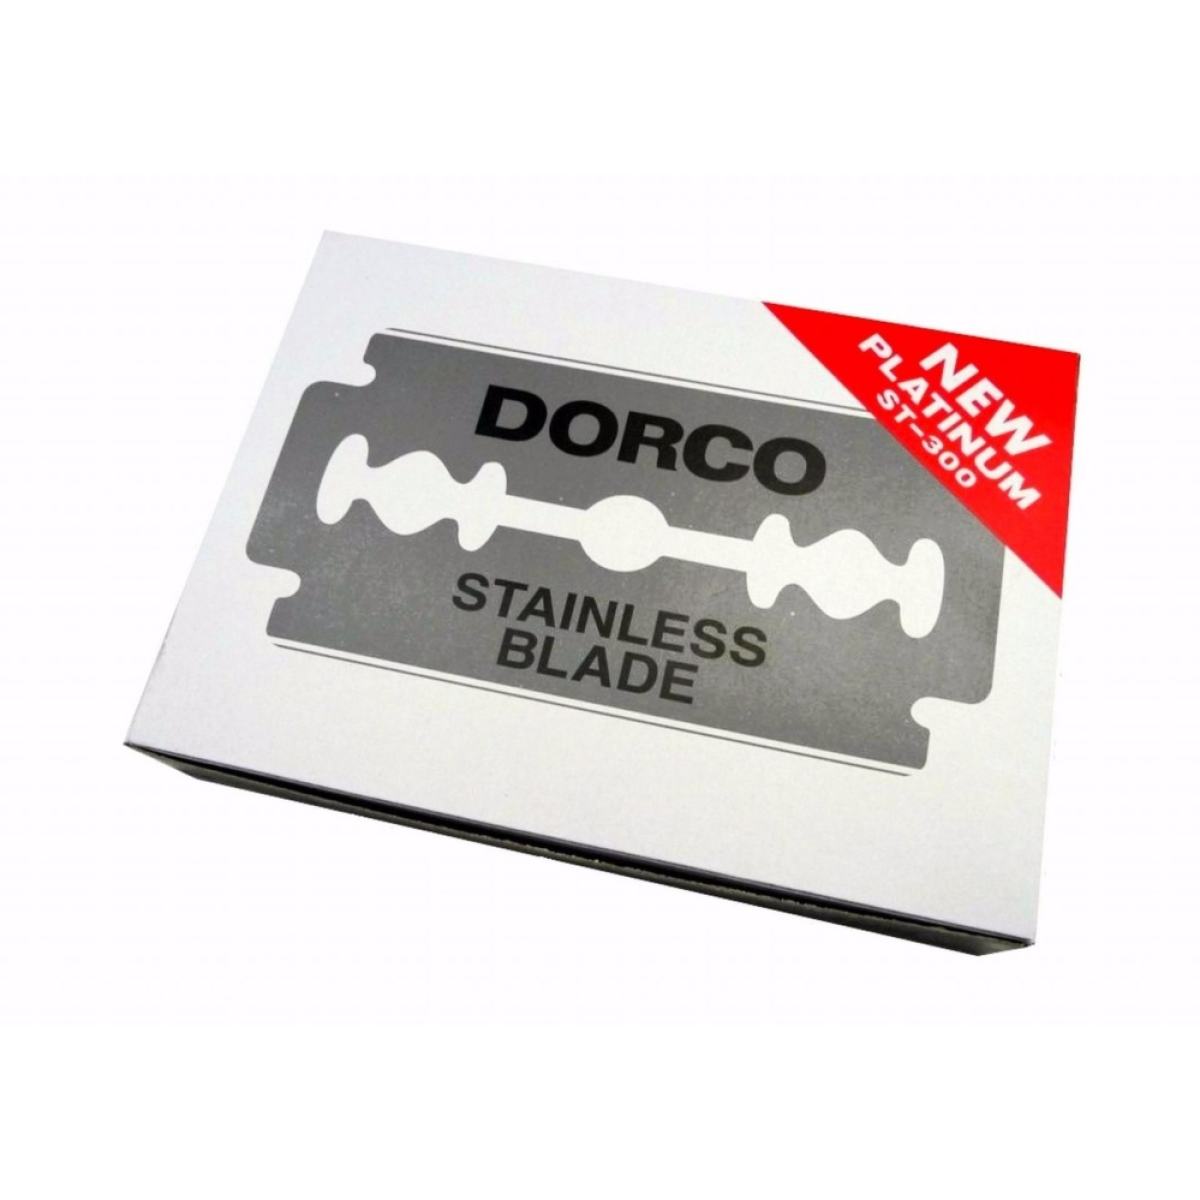 DORCO มีดโกนหนวด 2 คม Dorco Stainless Blade ตราดอร์โก้ แบบ 100 ใบมีด/กล่อง